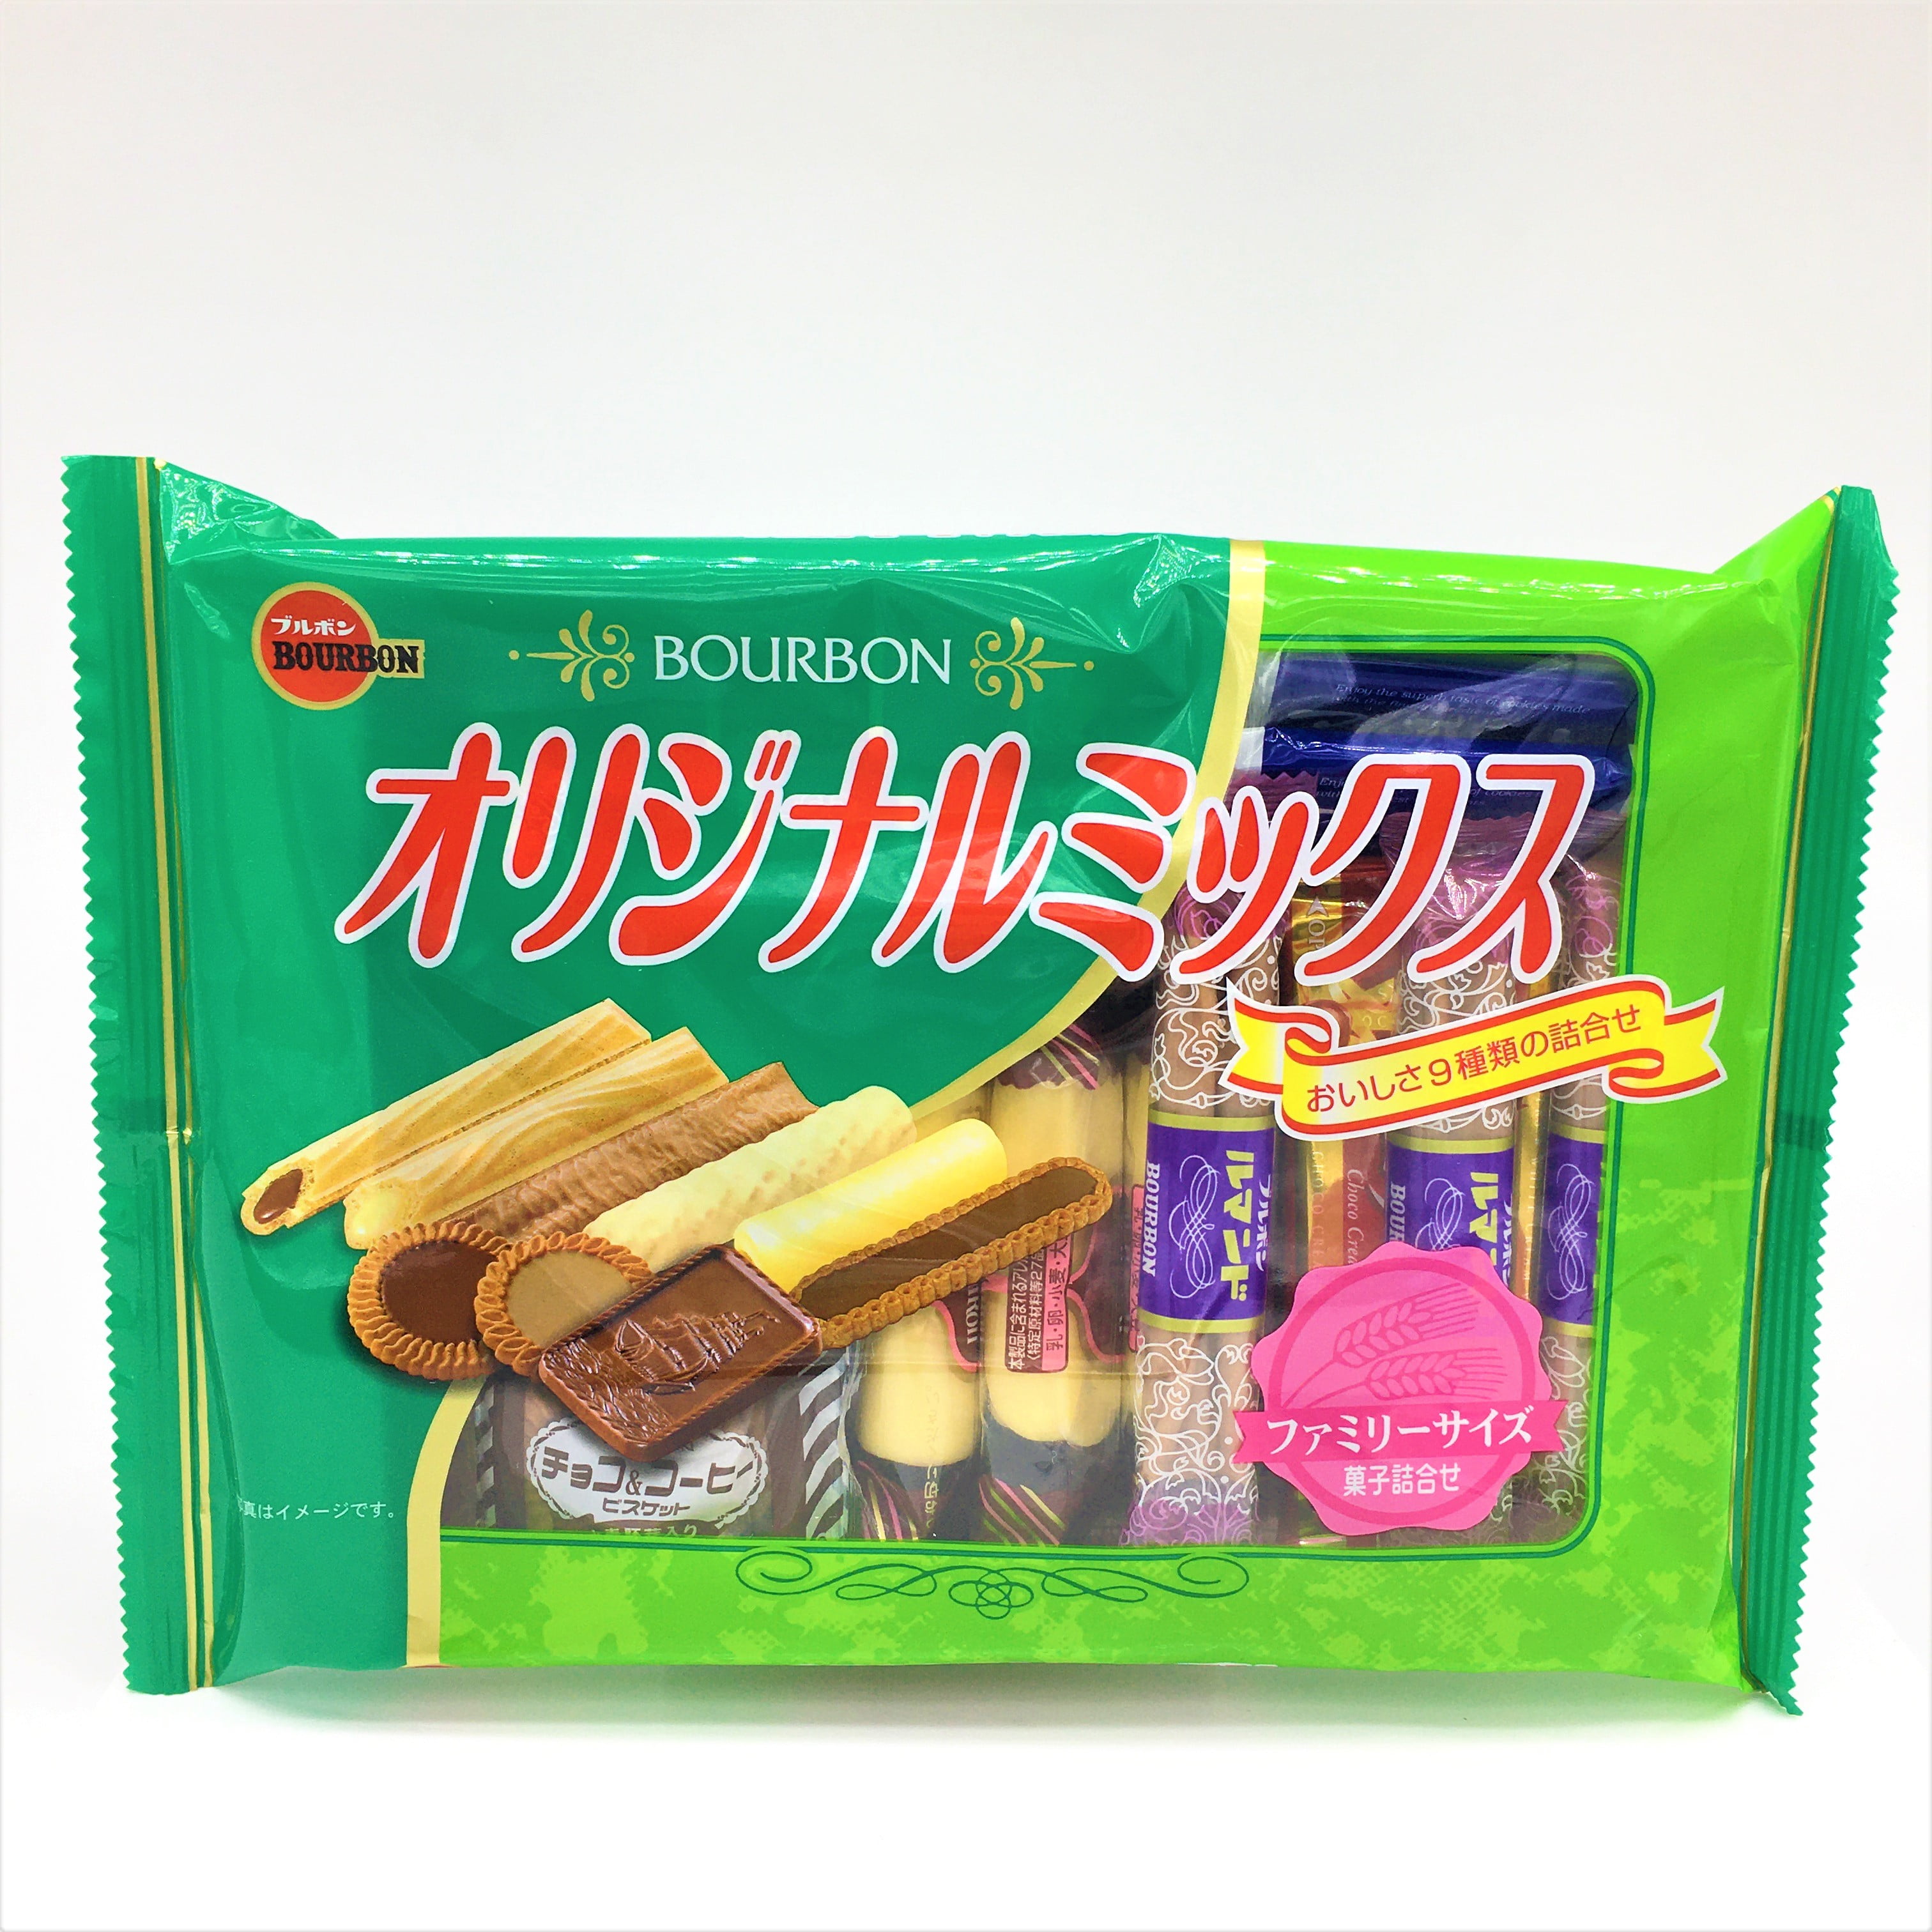 Bourbon 9 Kinds Of Cookies From Japan 170 G Walmart Com